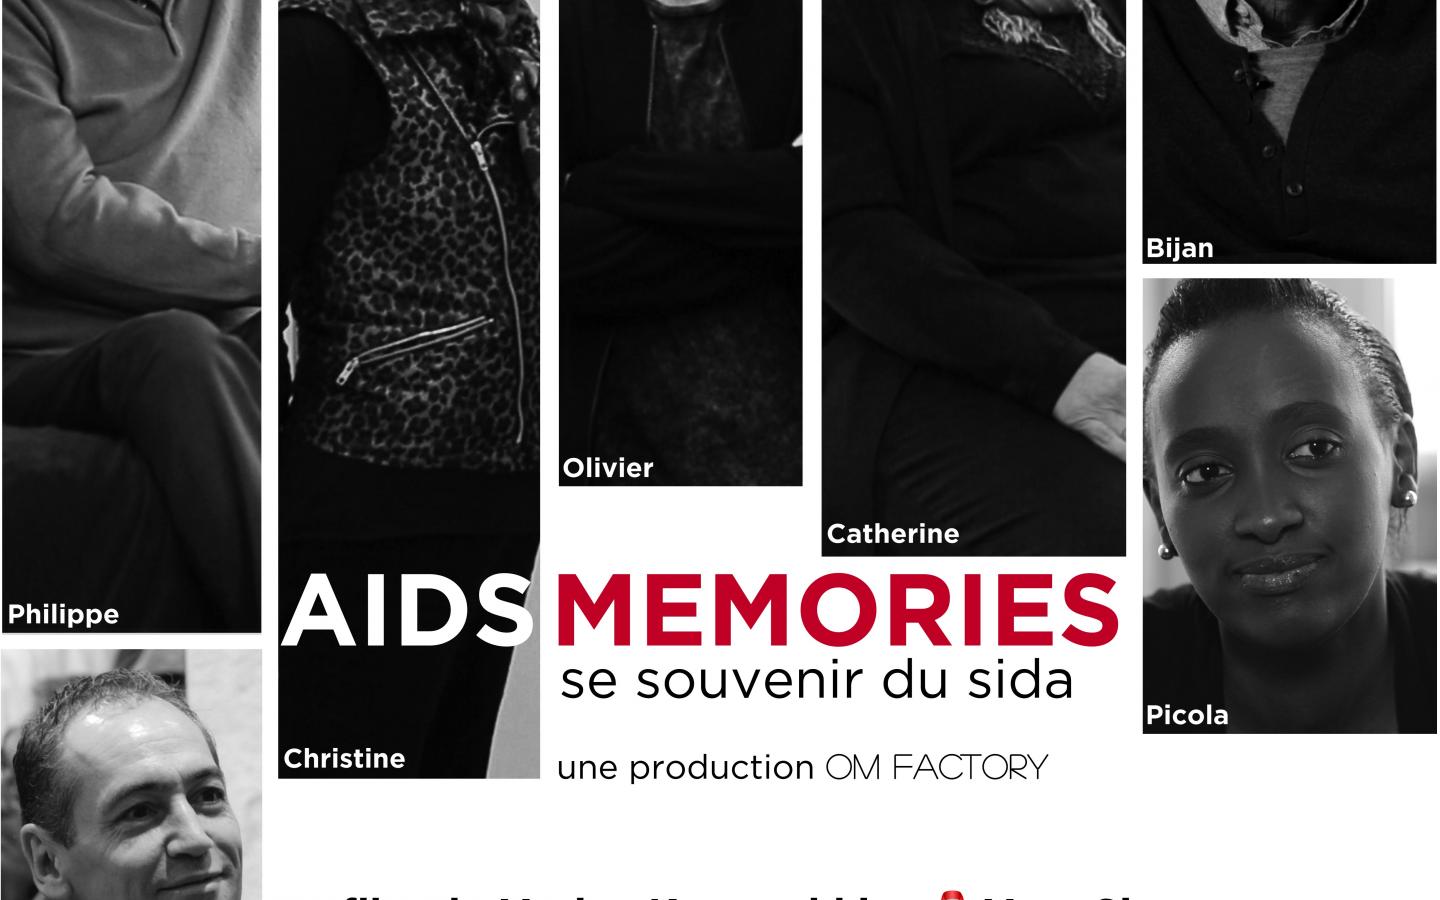 Aids memories